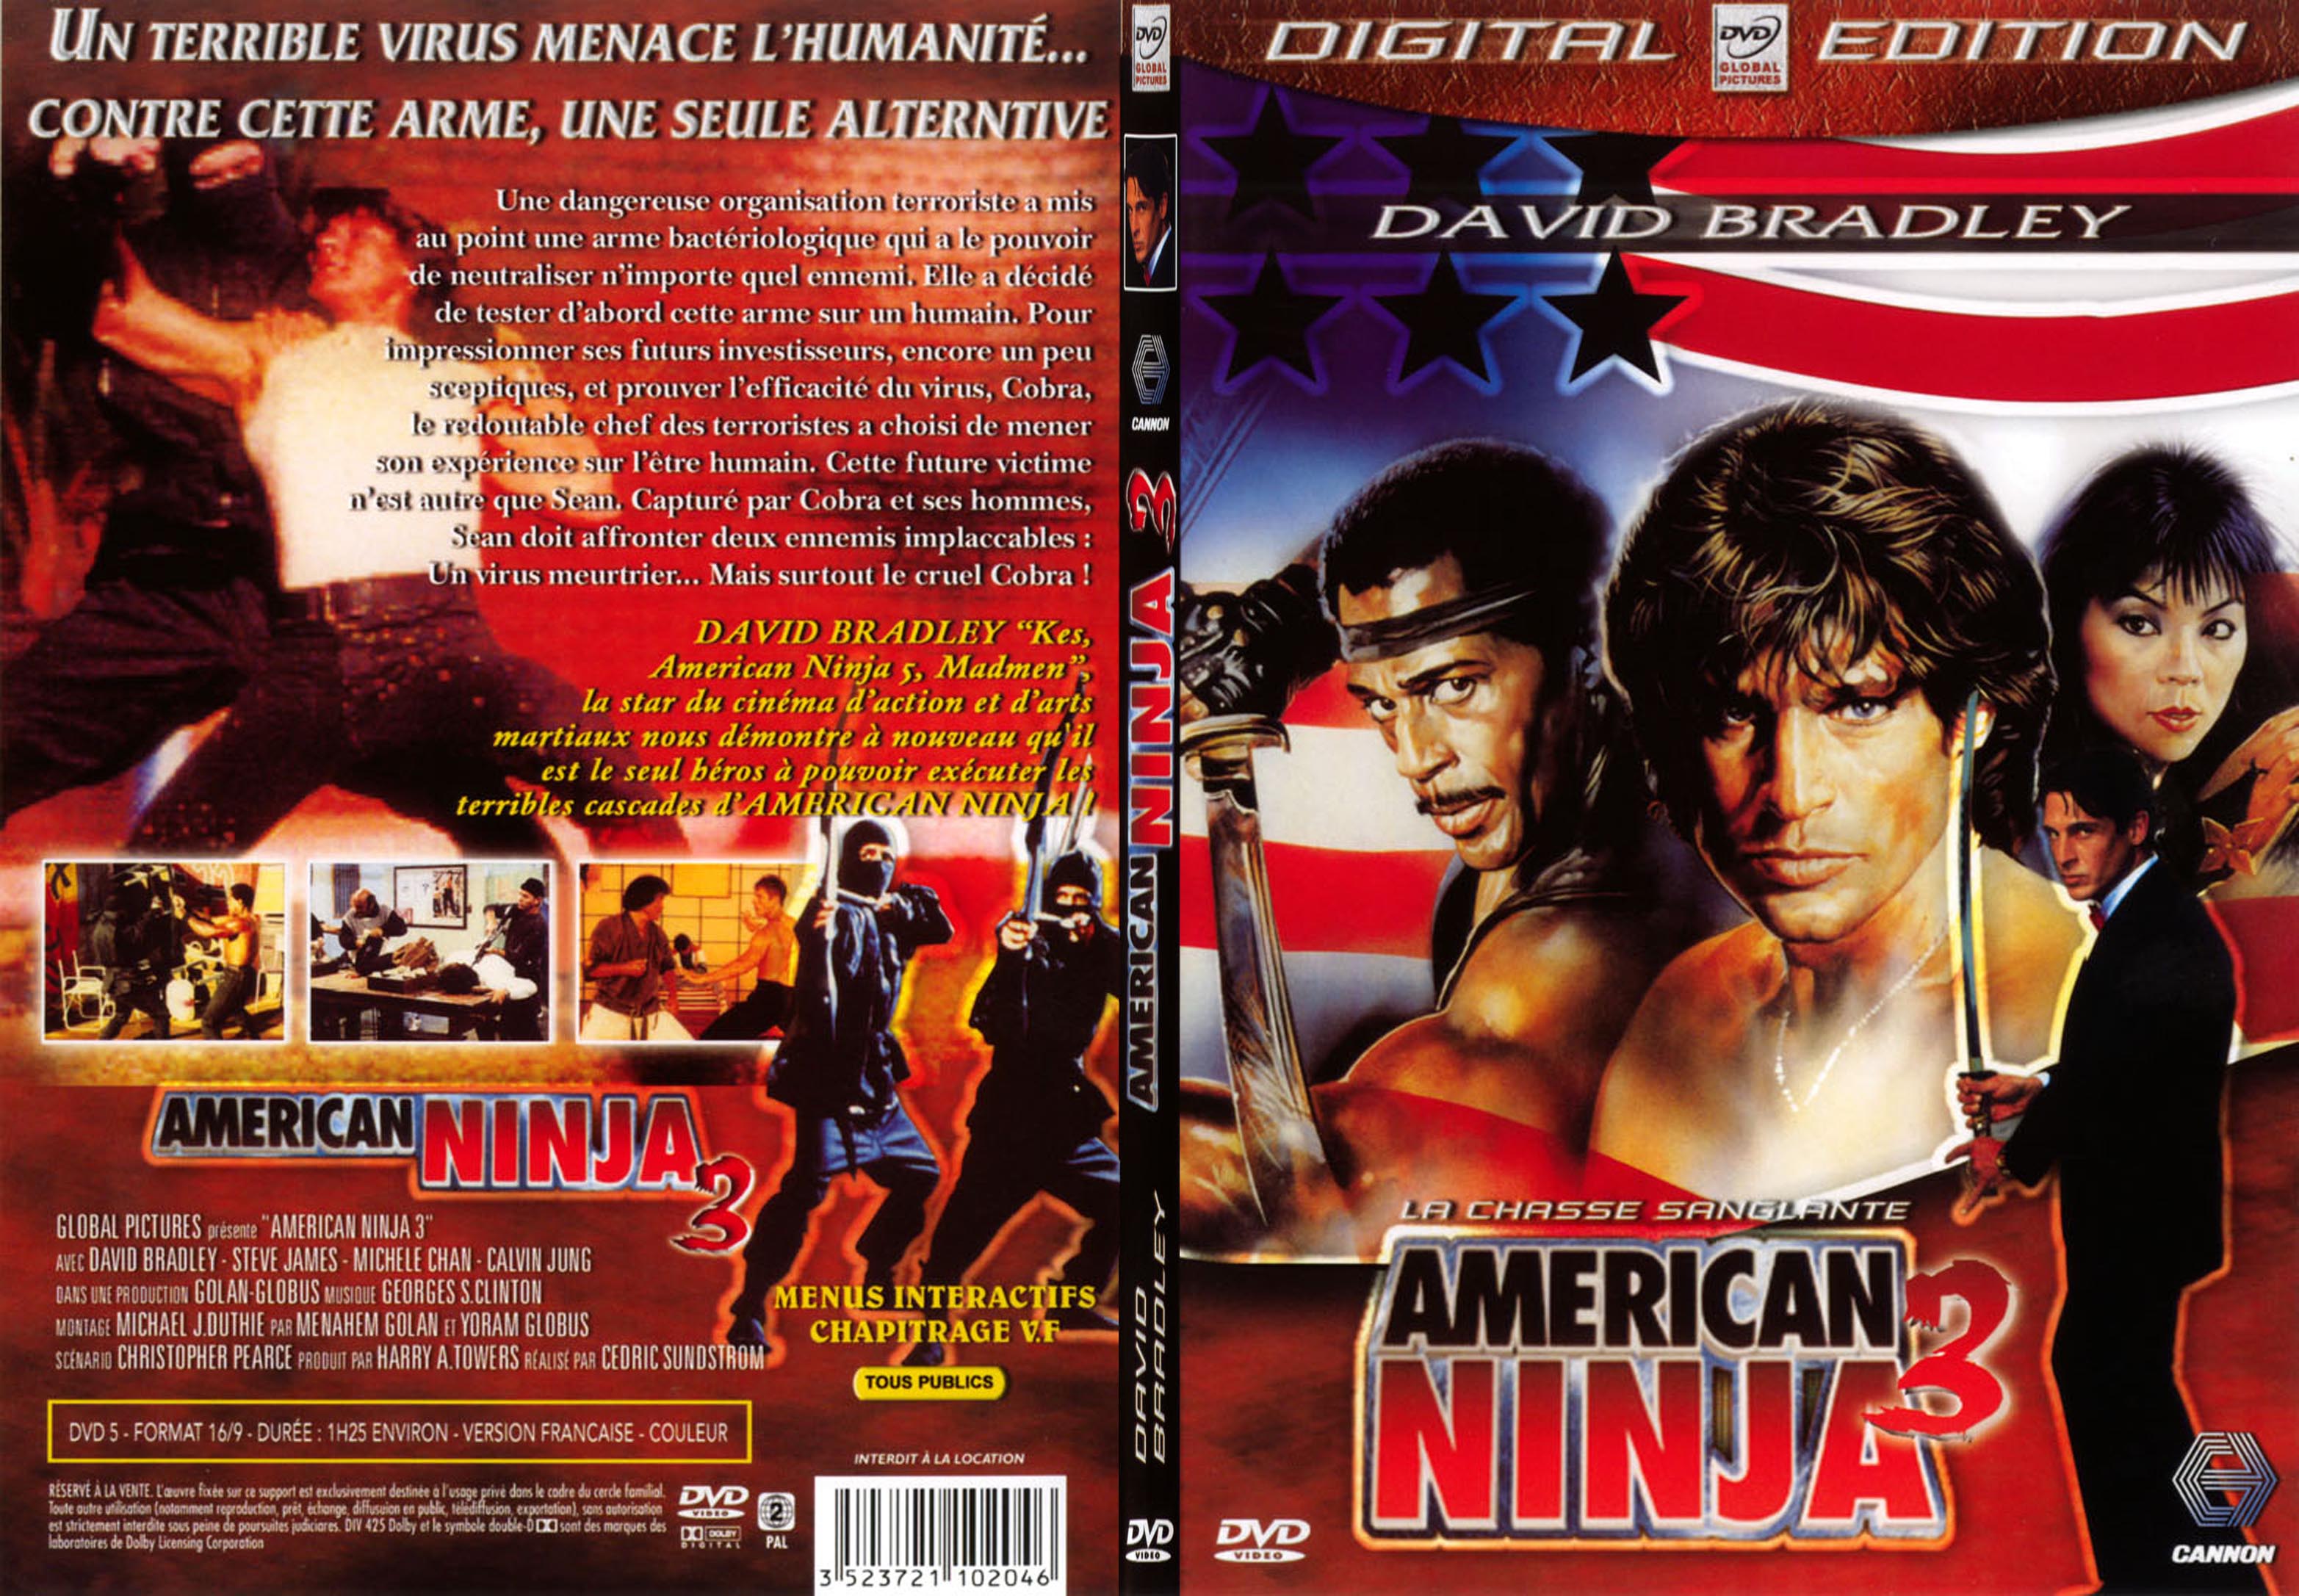 Jaquette DVD American ninja 3 - SLIM